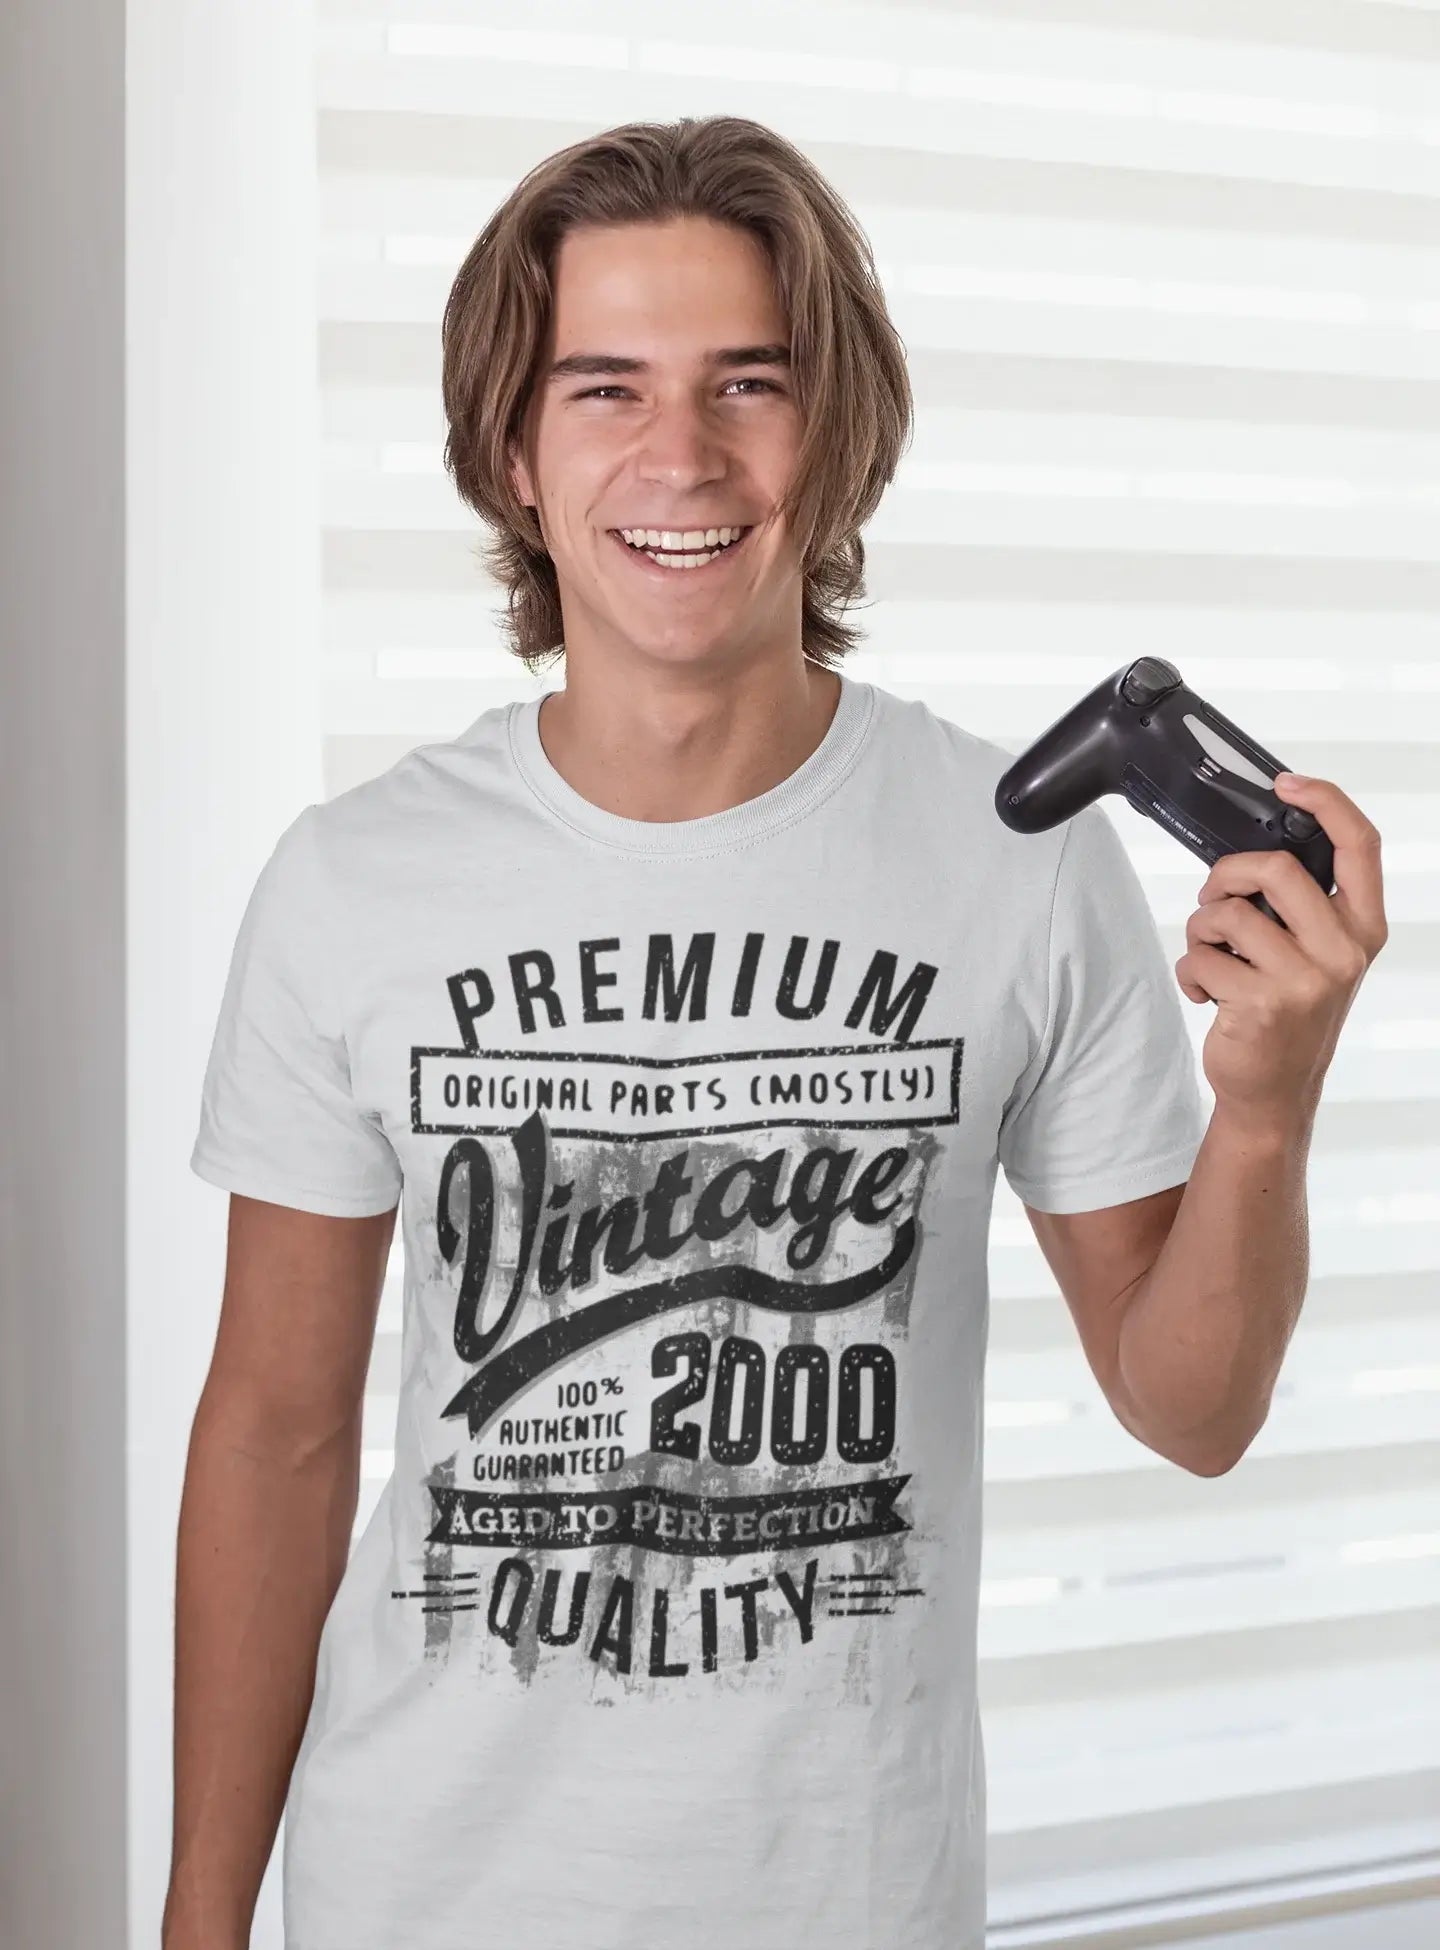 ULTRABASIC - T-shirt <span>cadeau</span> <span>d'anniversaire</span> <span>graphique</span> <span>pour hommes</span> 2000 Aged to Perfection